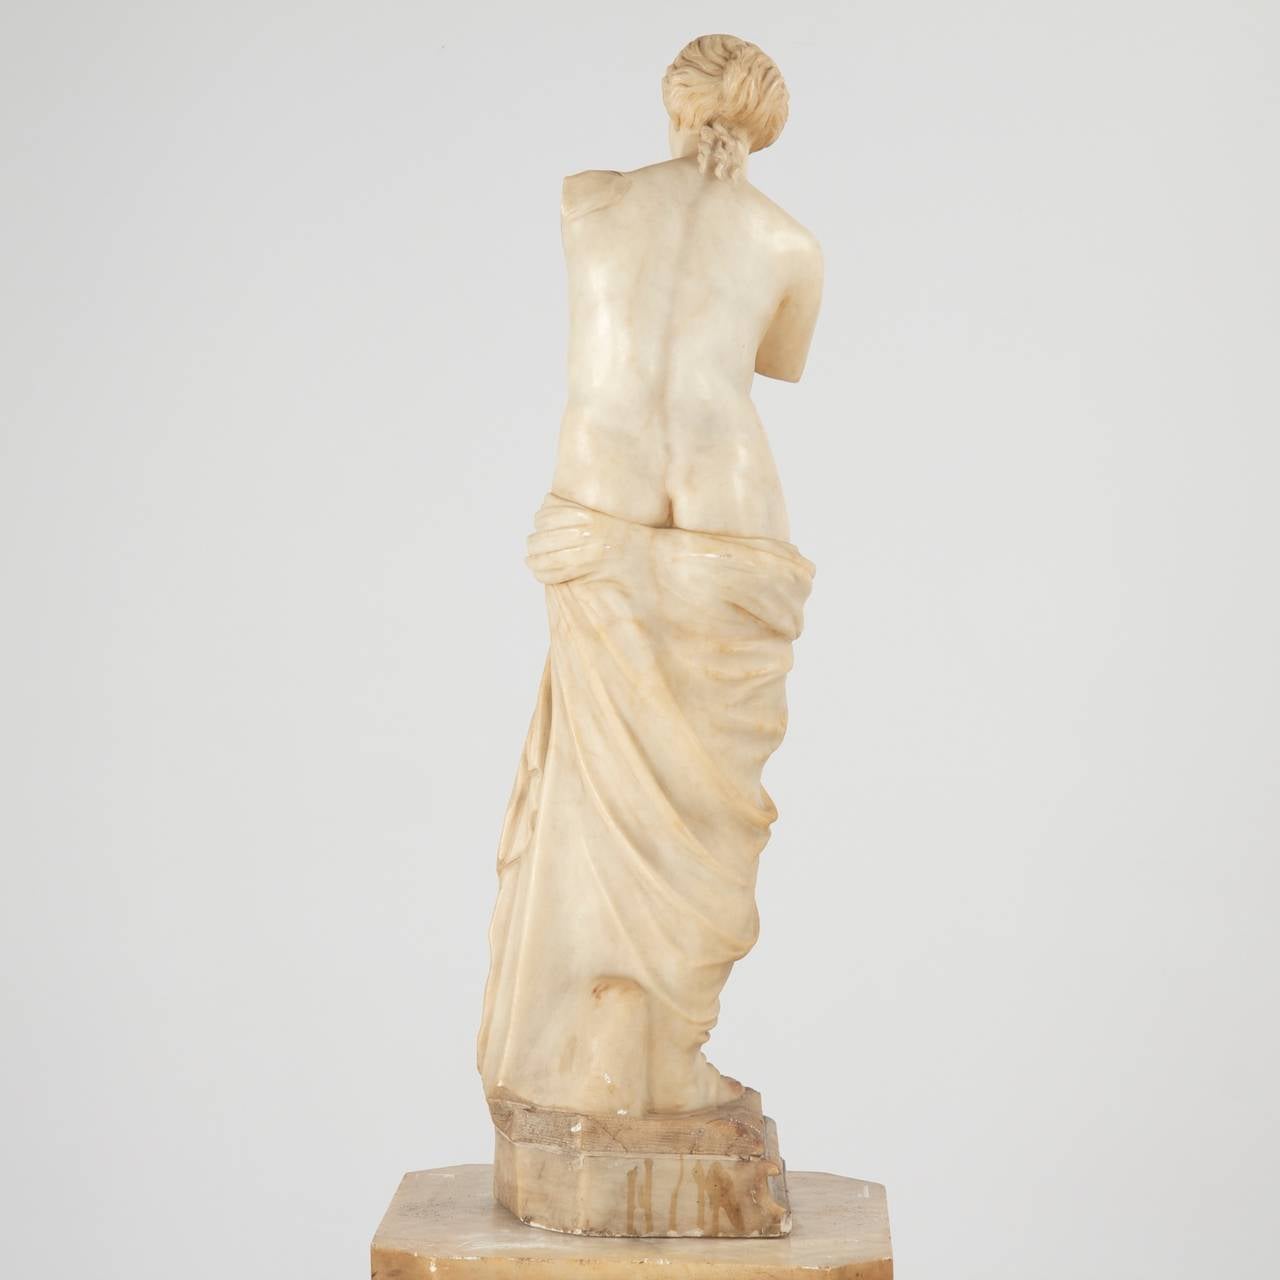 19th Century Continental Marble Sculpture of Venus de Milo, after the Antique